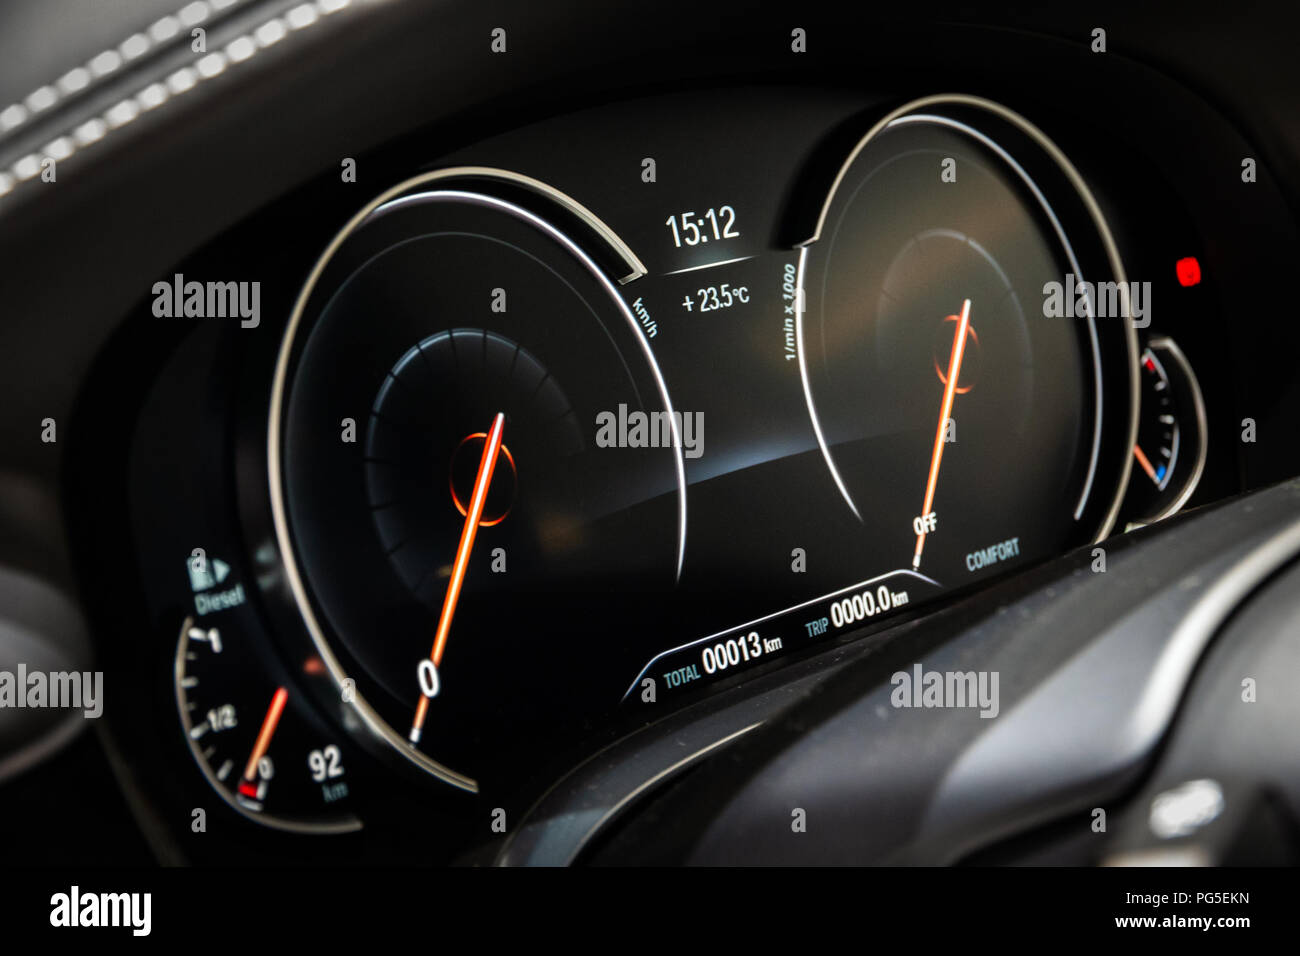 GENEVA, SWITZERLAND - MARCH 6, 2018: Digital dashboard of a BMW 7-series car showcased at the 88th Geneva International Motor Show. Stock Photo